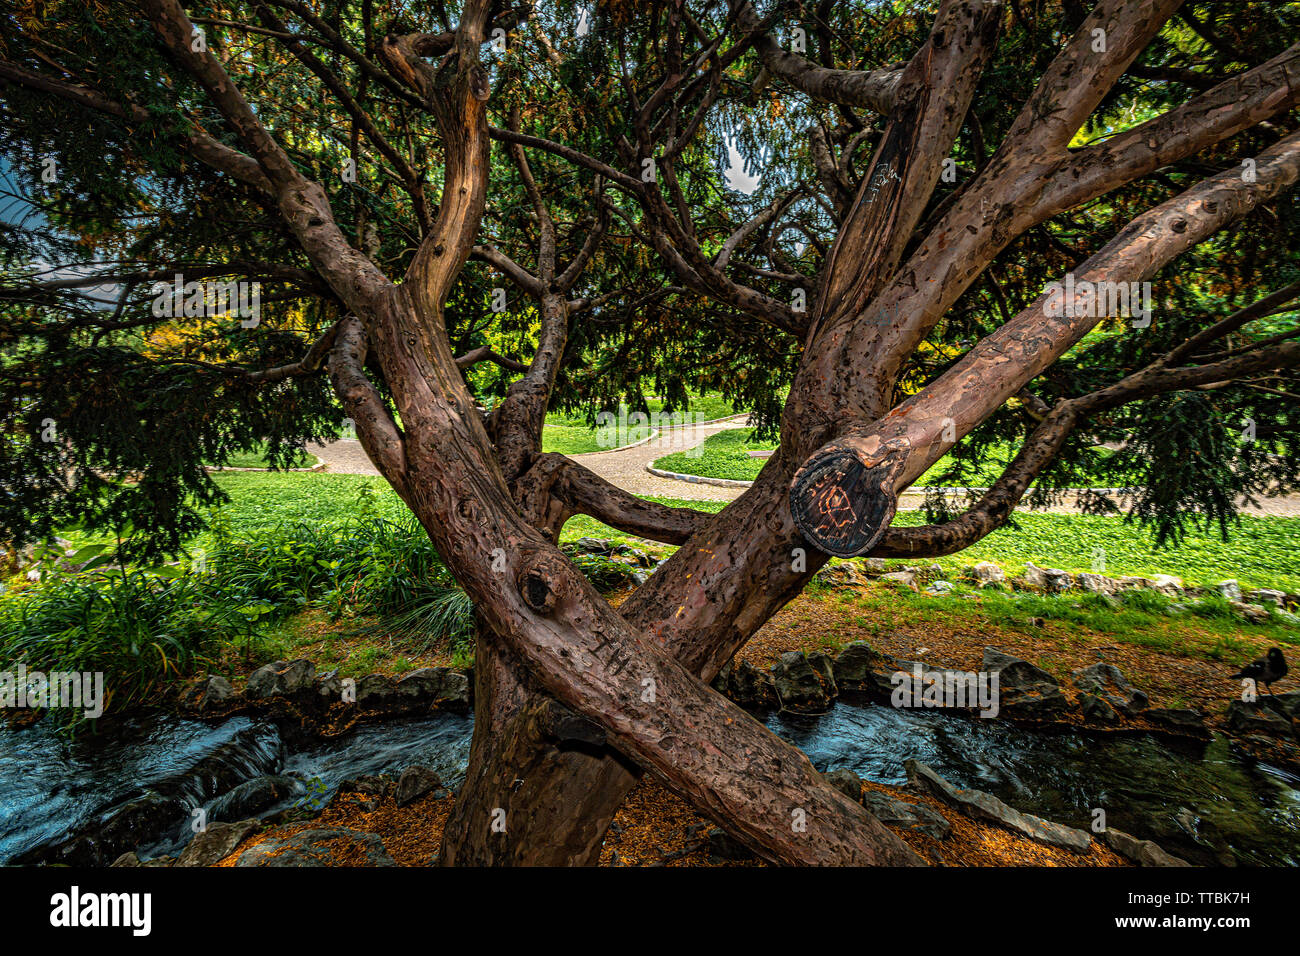 Italy Piedmont Turin Valentino park - Rock garden - trees Stock Photo